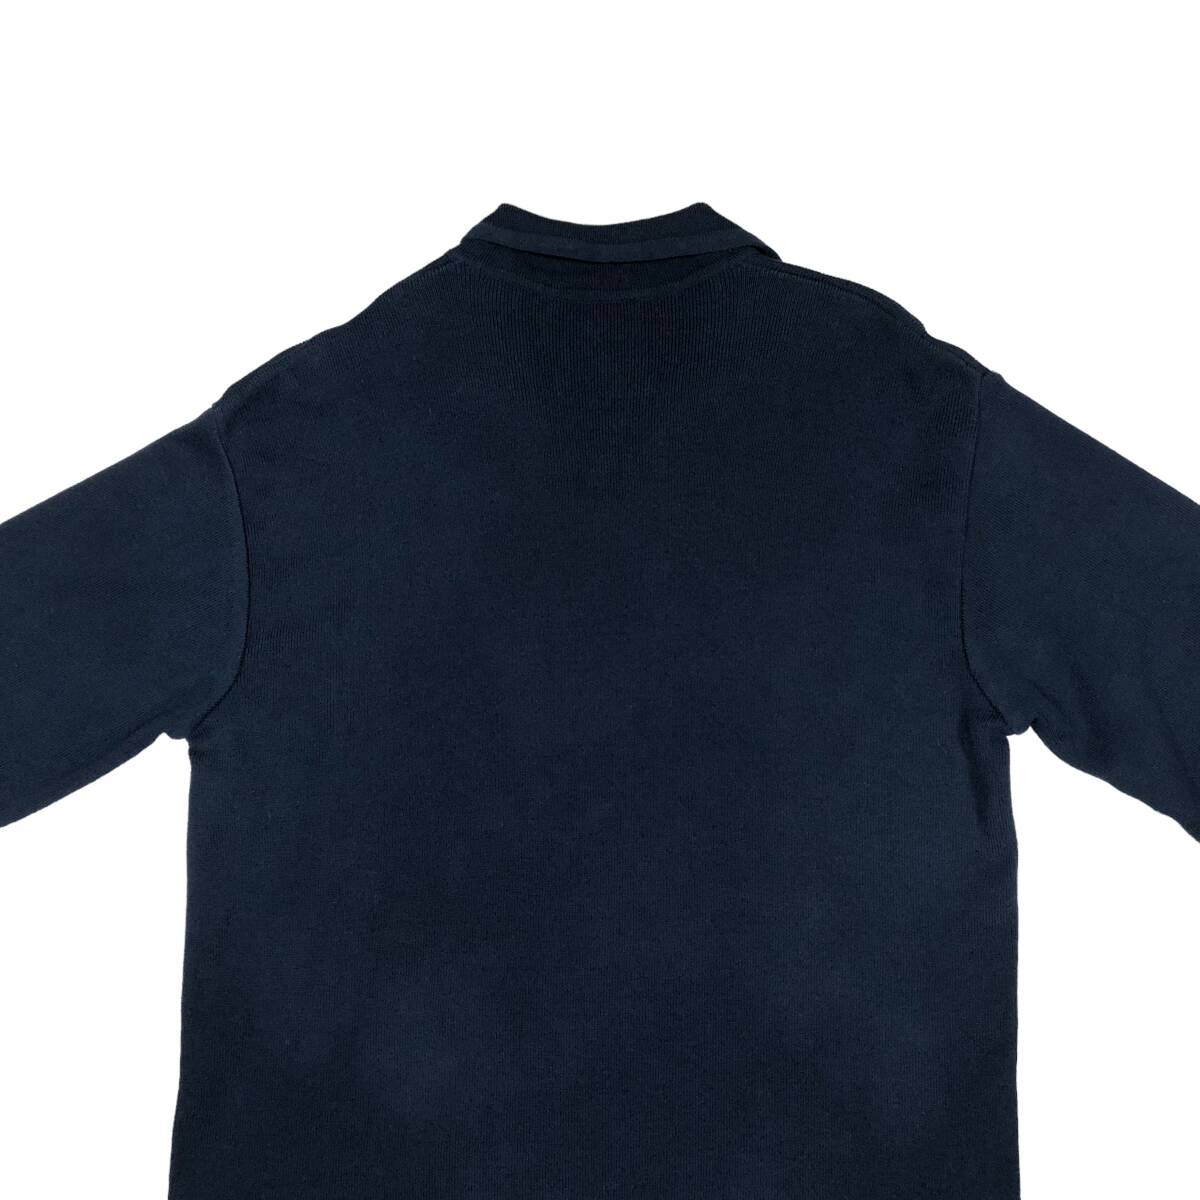 B3248[GIORGIO ARMANI]joru geo Armani knitted cut and sewn Italy made Vintage LE COLLEZIONI collar attaching sweater long sleeve 1 jpy ~